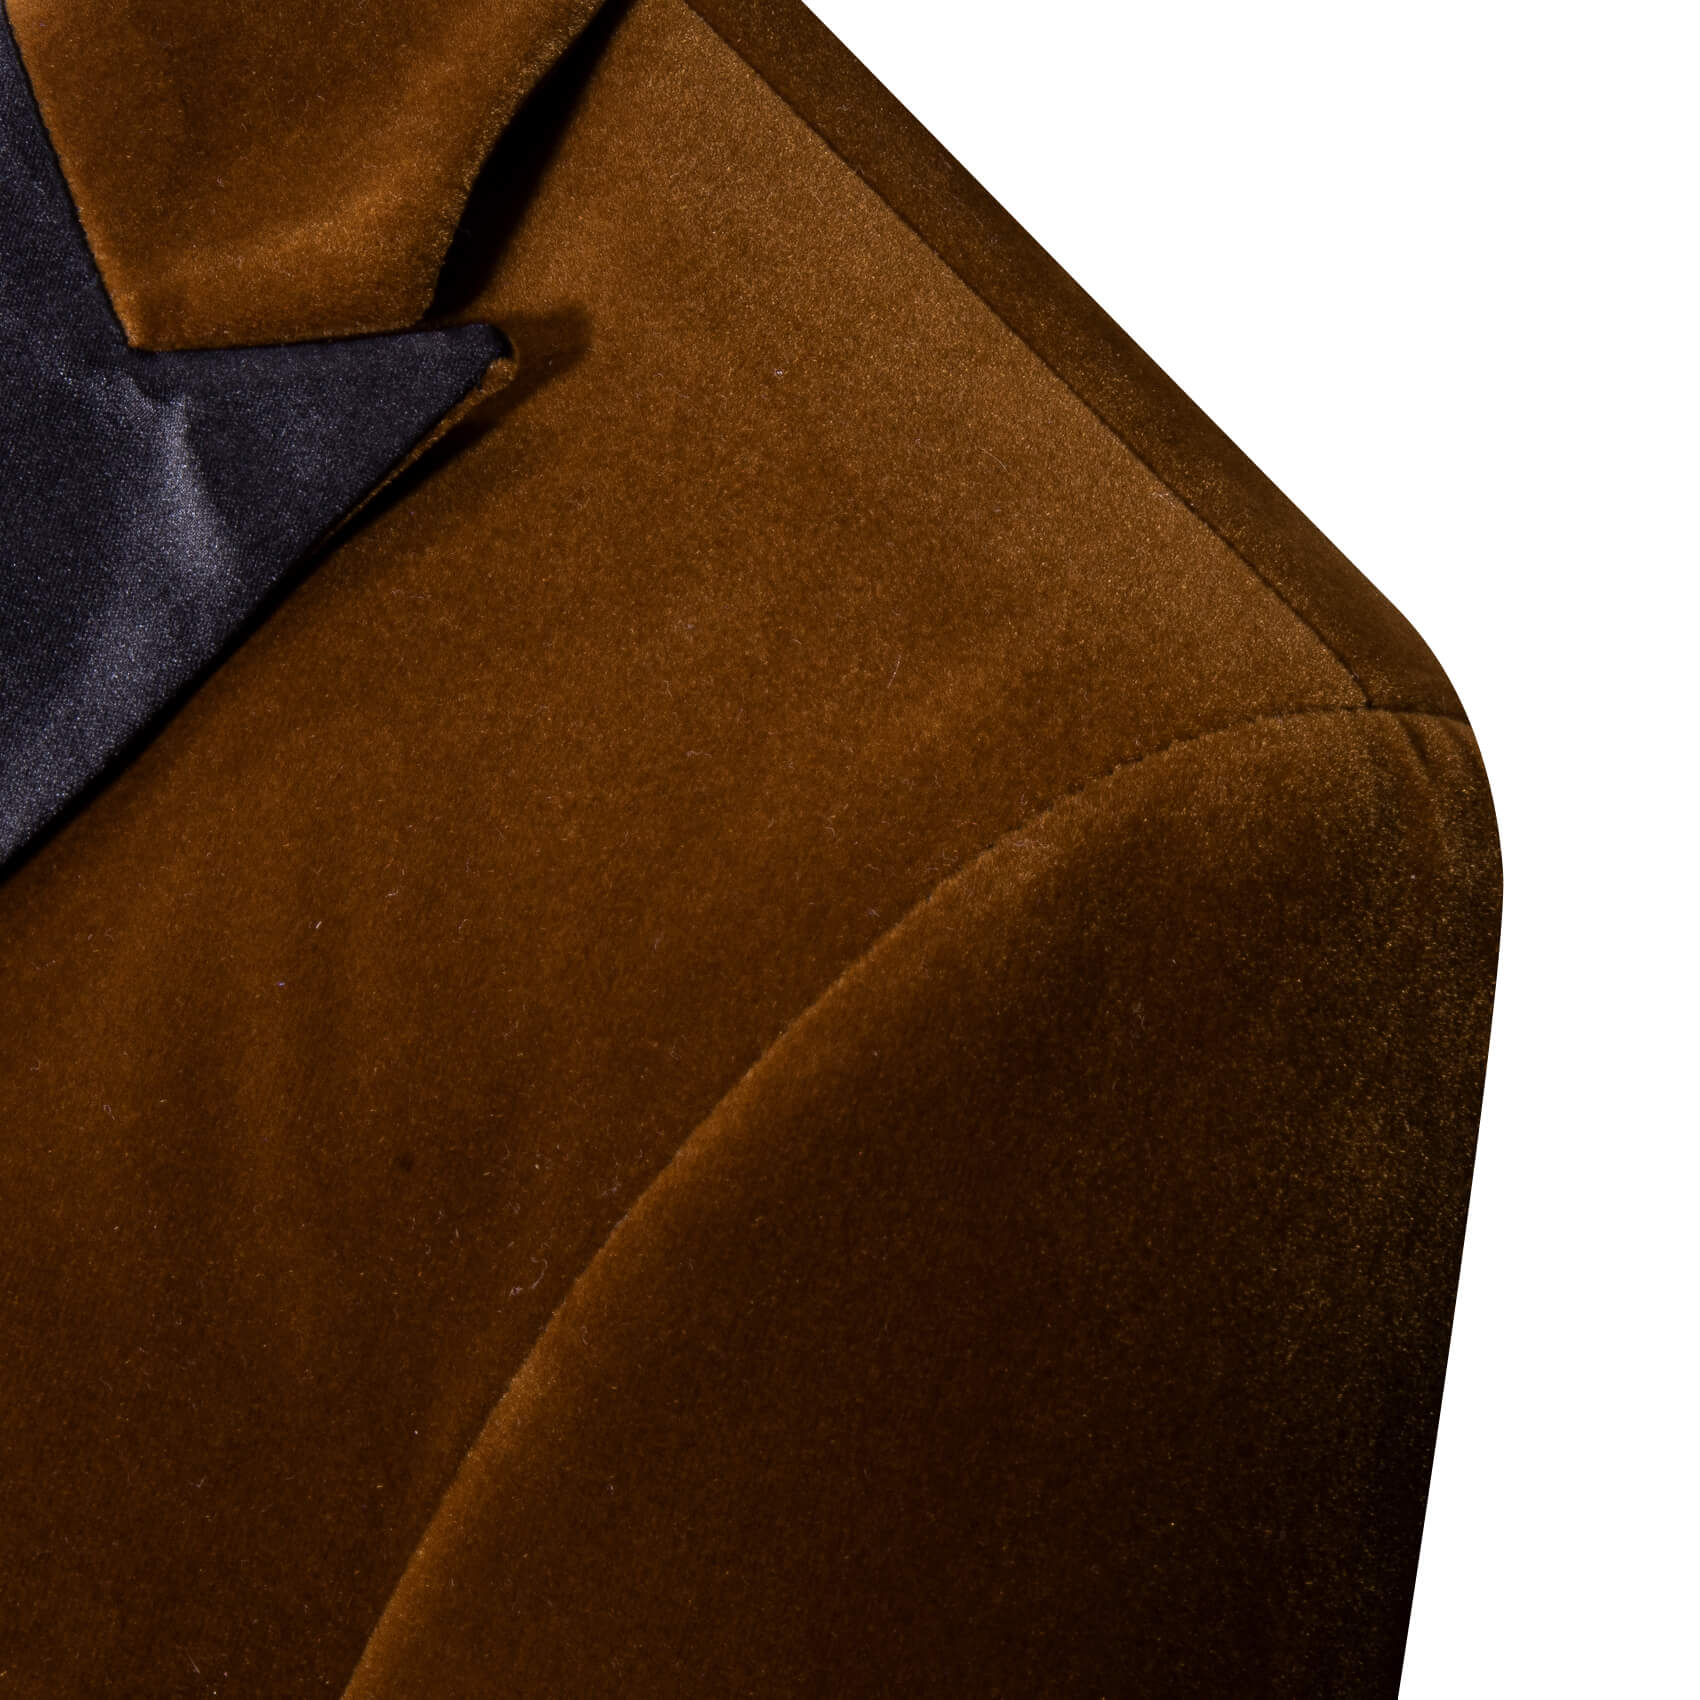 Barry.wang Men's Suit Chocolate Brown Solid Silk Peak Collar Suit Classic